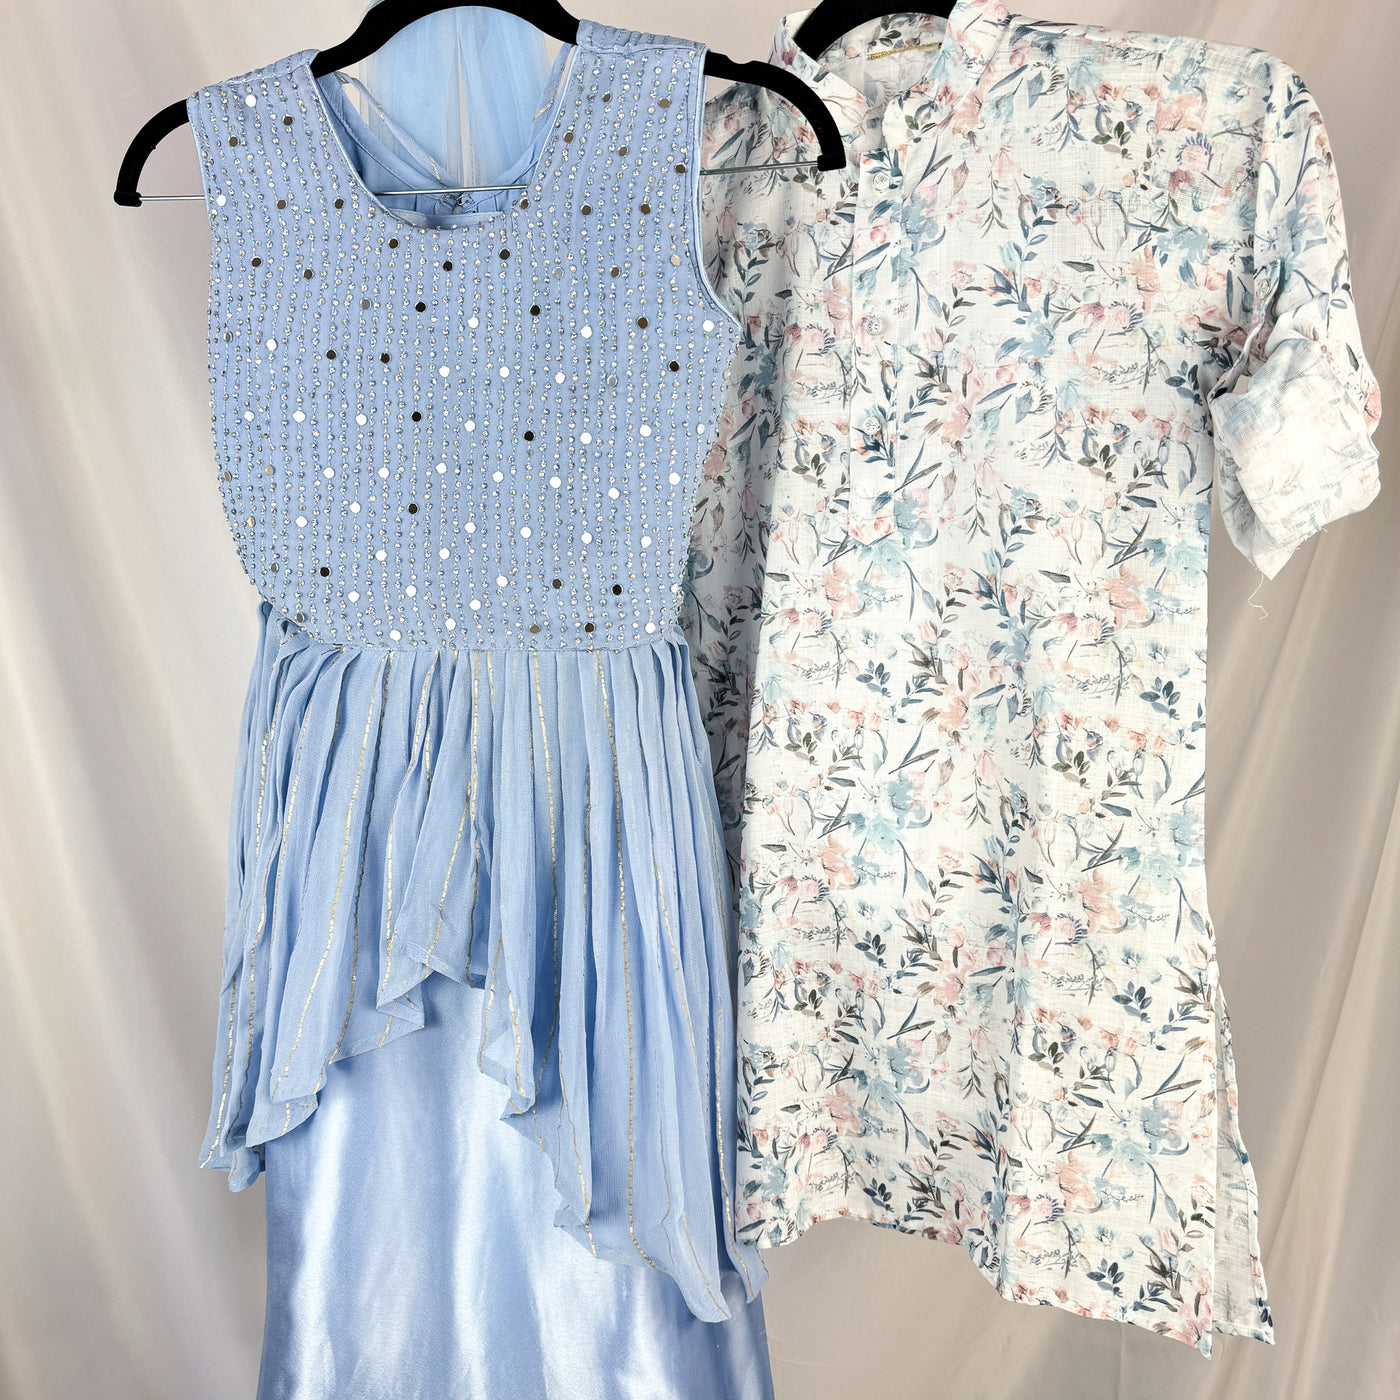 Sibling Set - Baby Blue Lehenga and Blue Floral Kurta Pajama